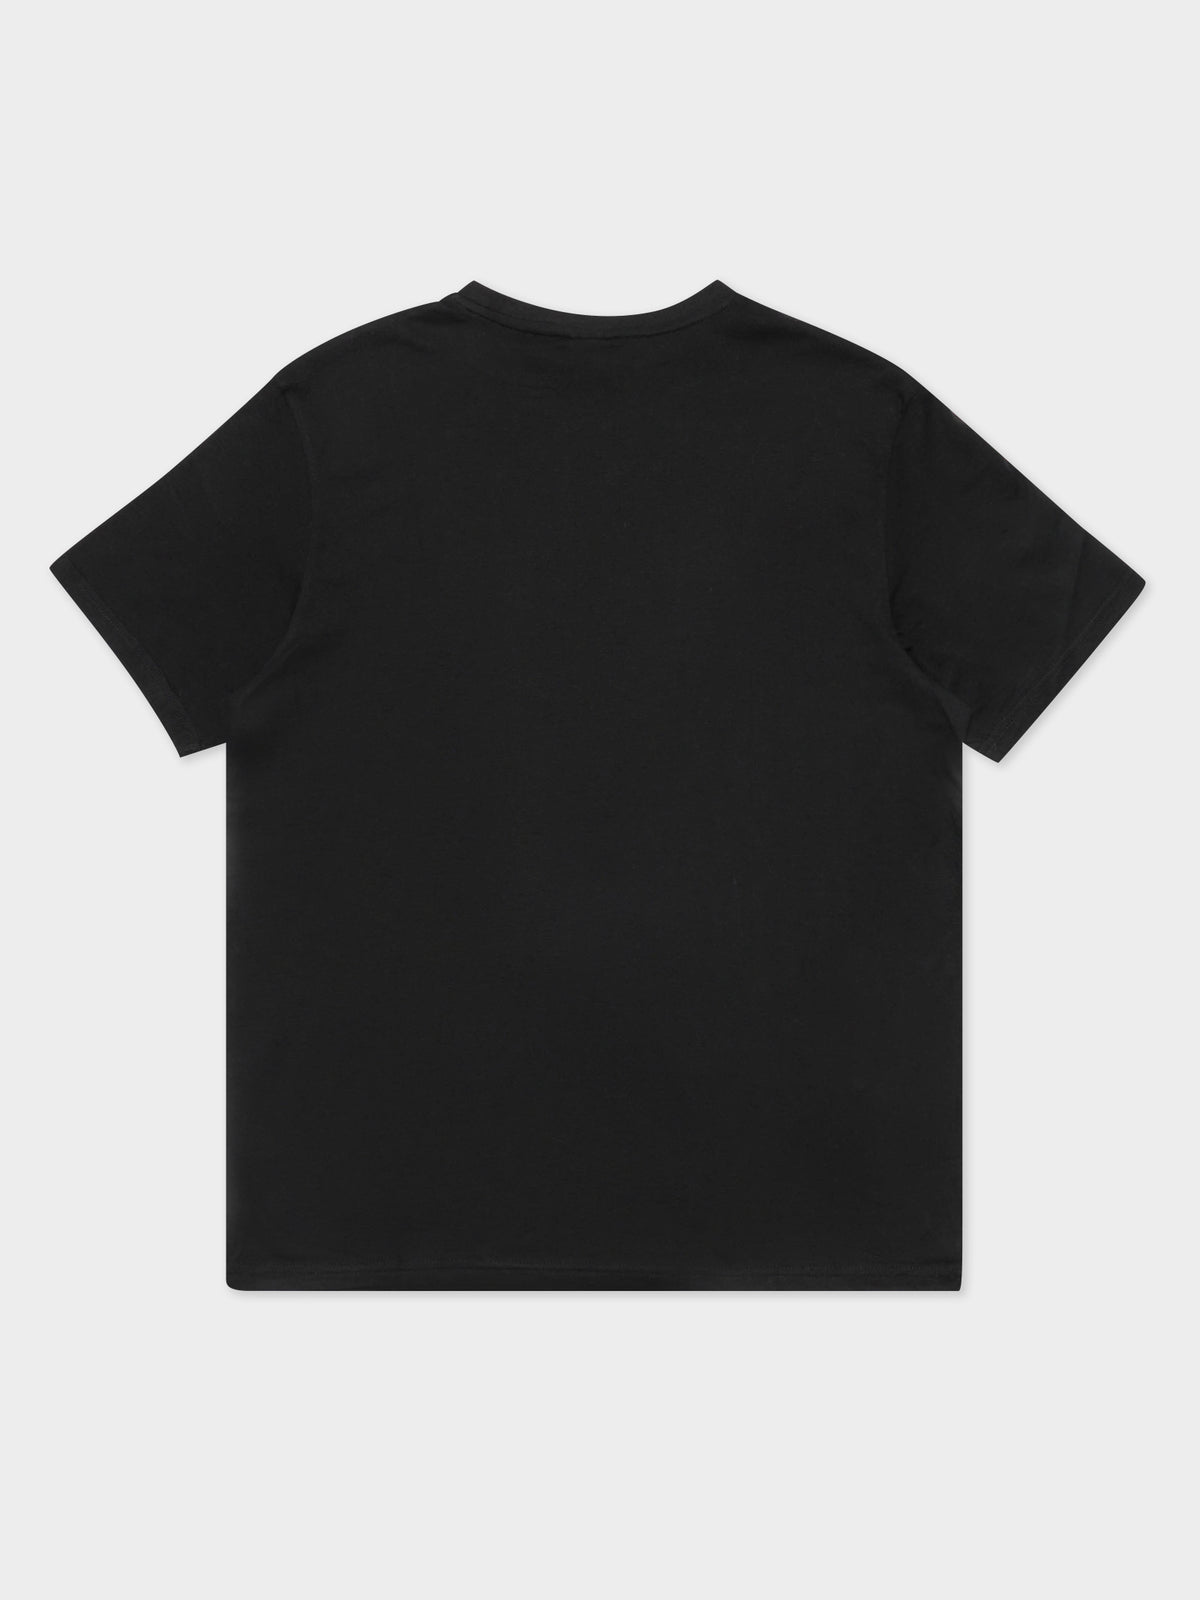 Authentic Dris T-Shirt in Black Relfective